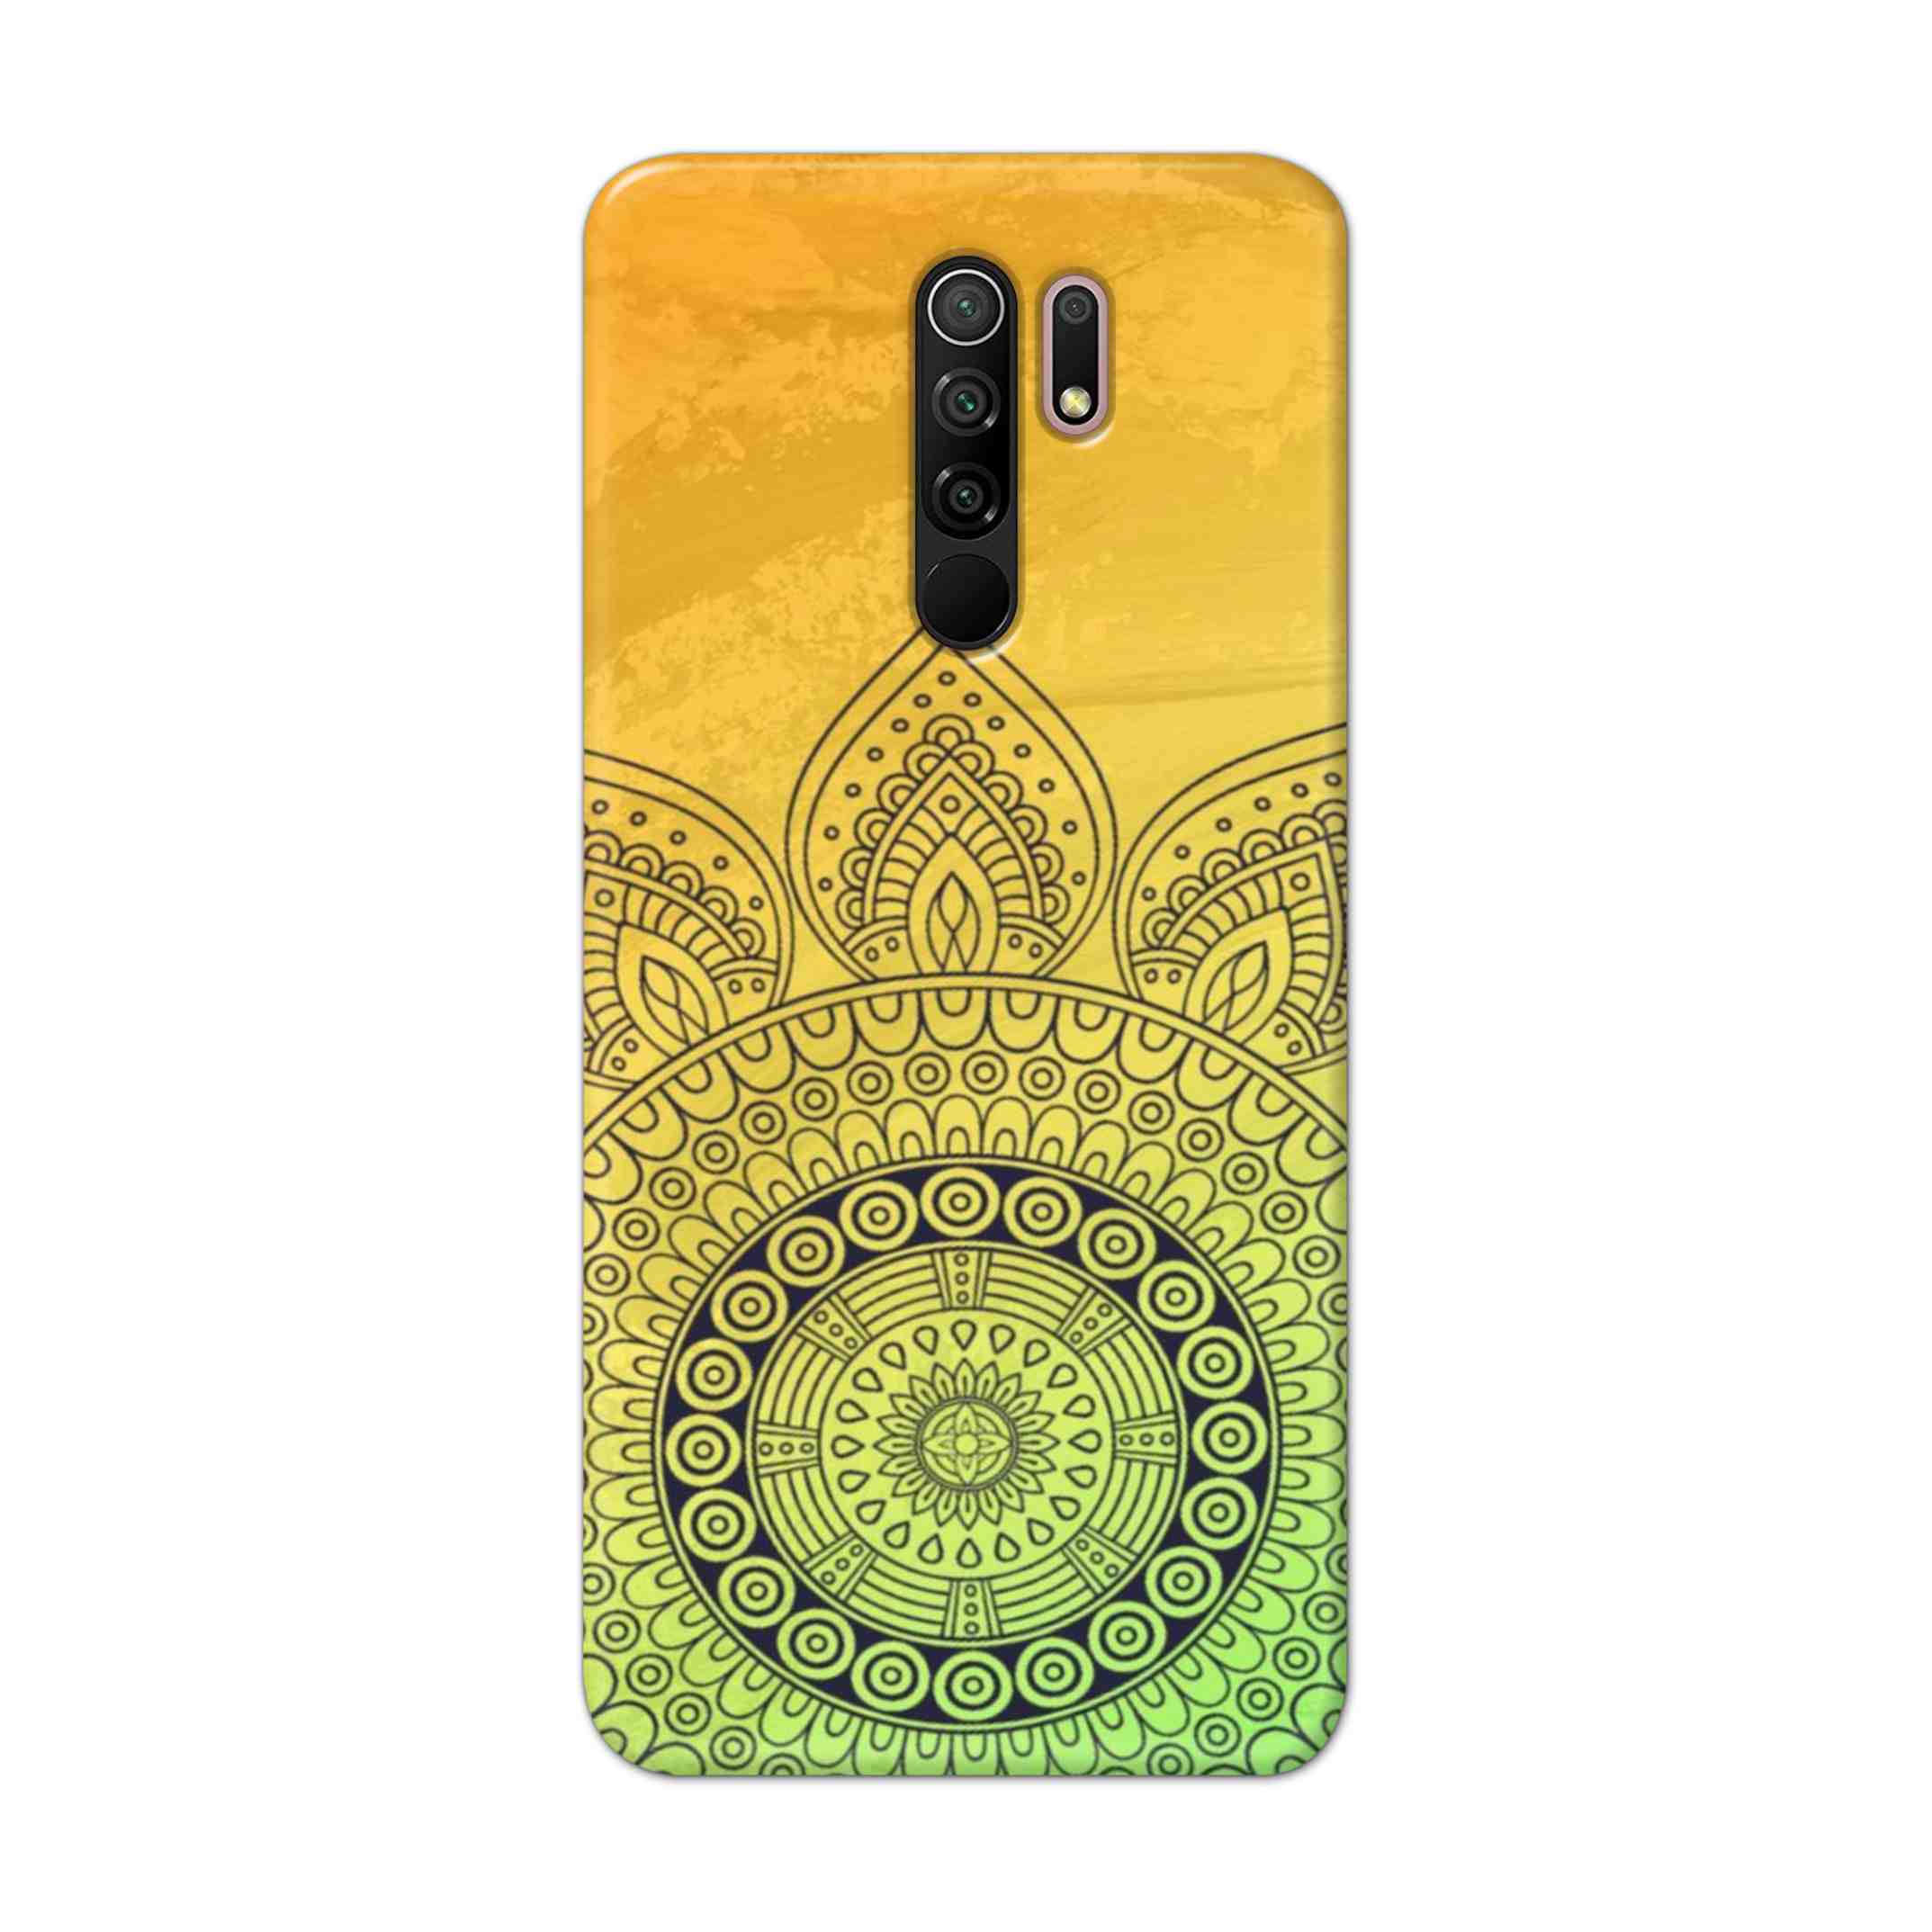 Buy Yellow Rangoli Hard Back Mobile Phone Case Cover For Xiaomi Redmi 9 Prime Online